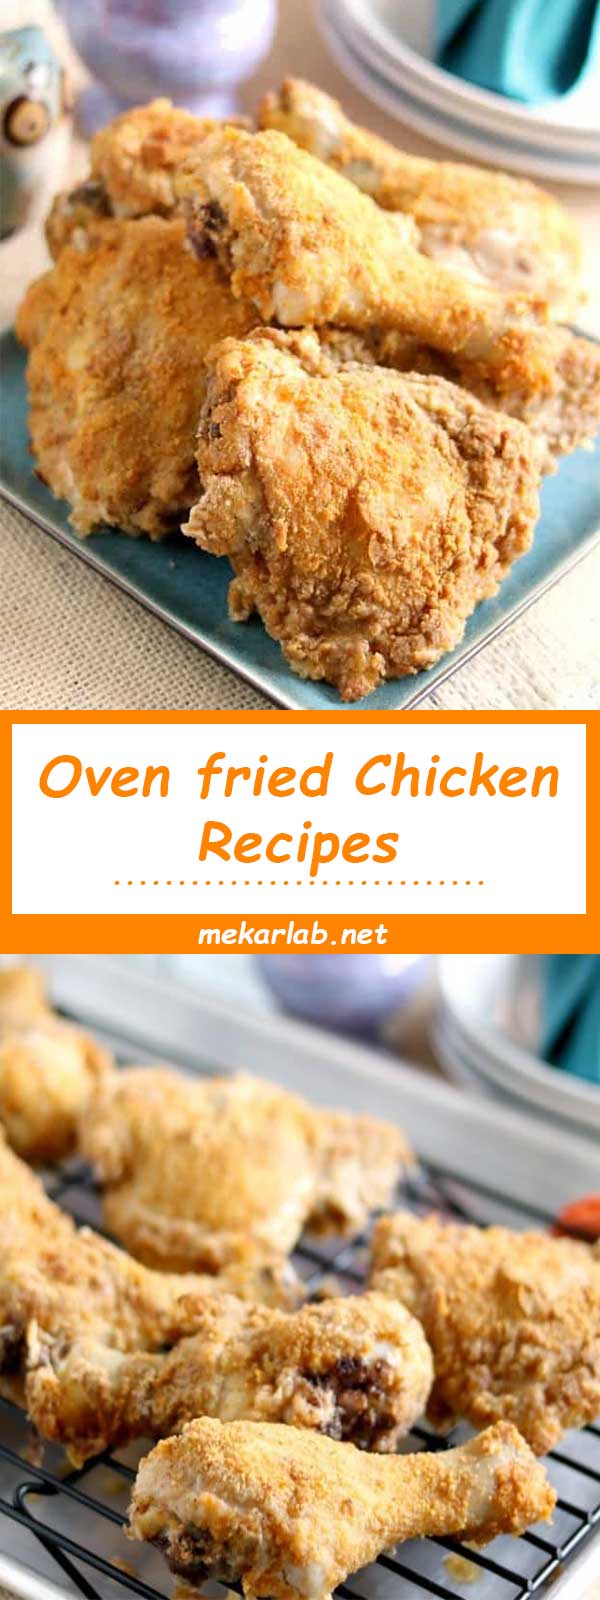 Oven fried Chicken Recipes – Mekarlab.net